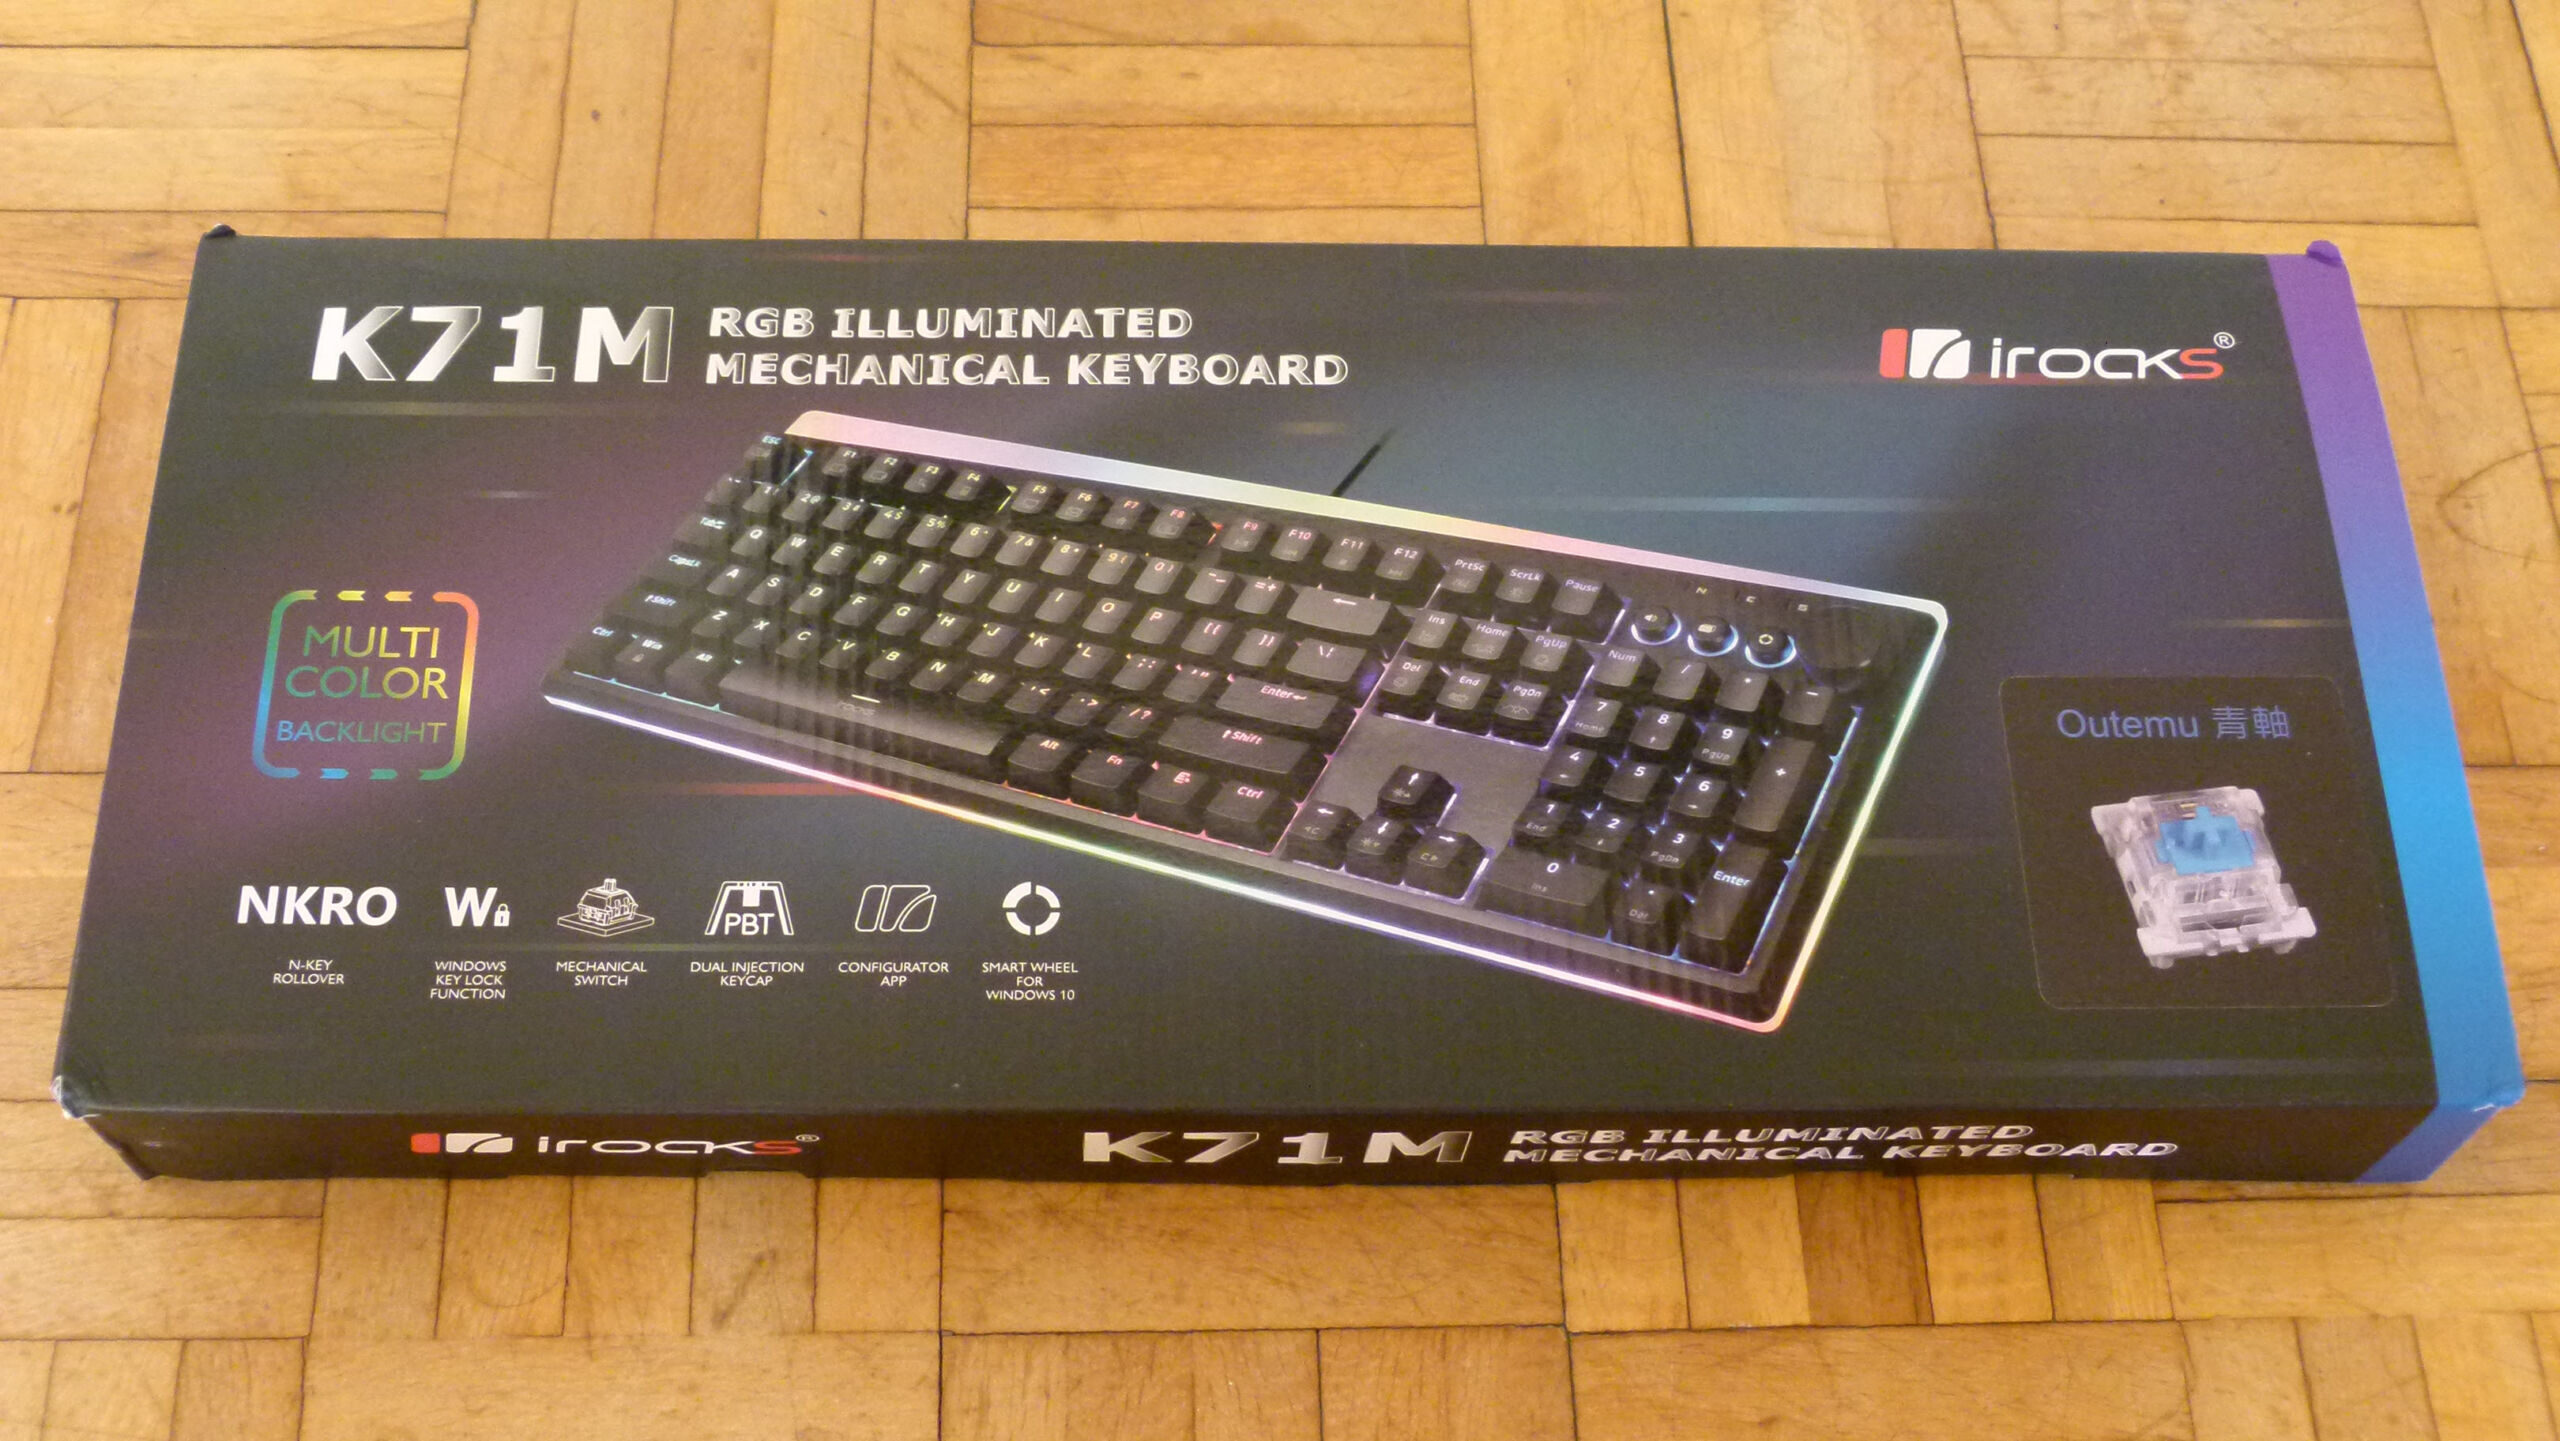 The i-Rocks K71M RGB Mechanical Keyboard Review